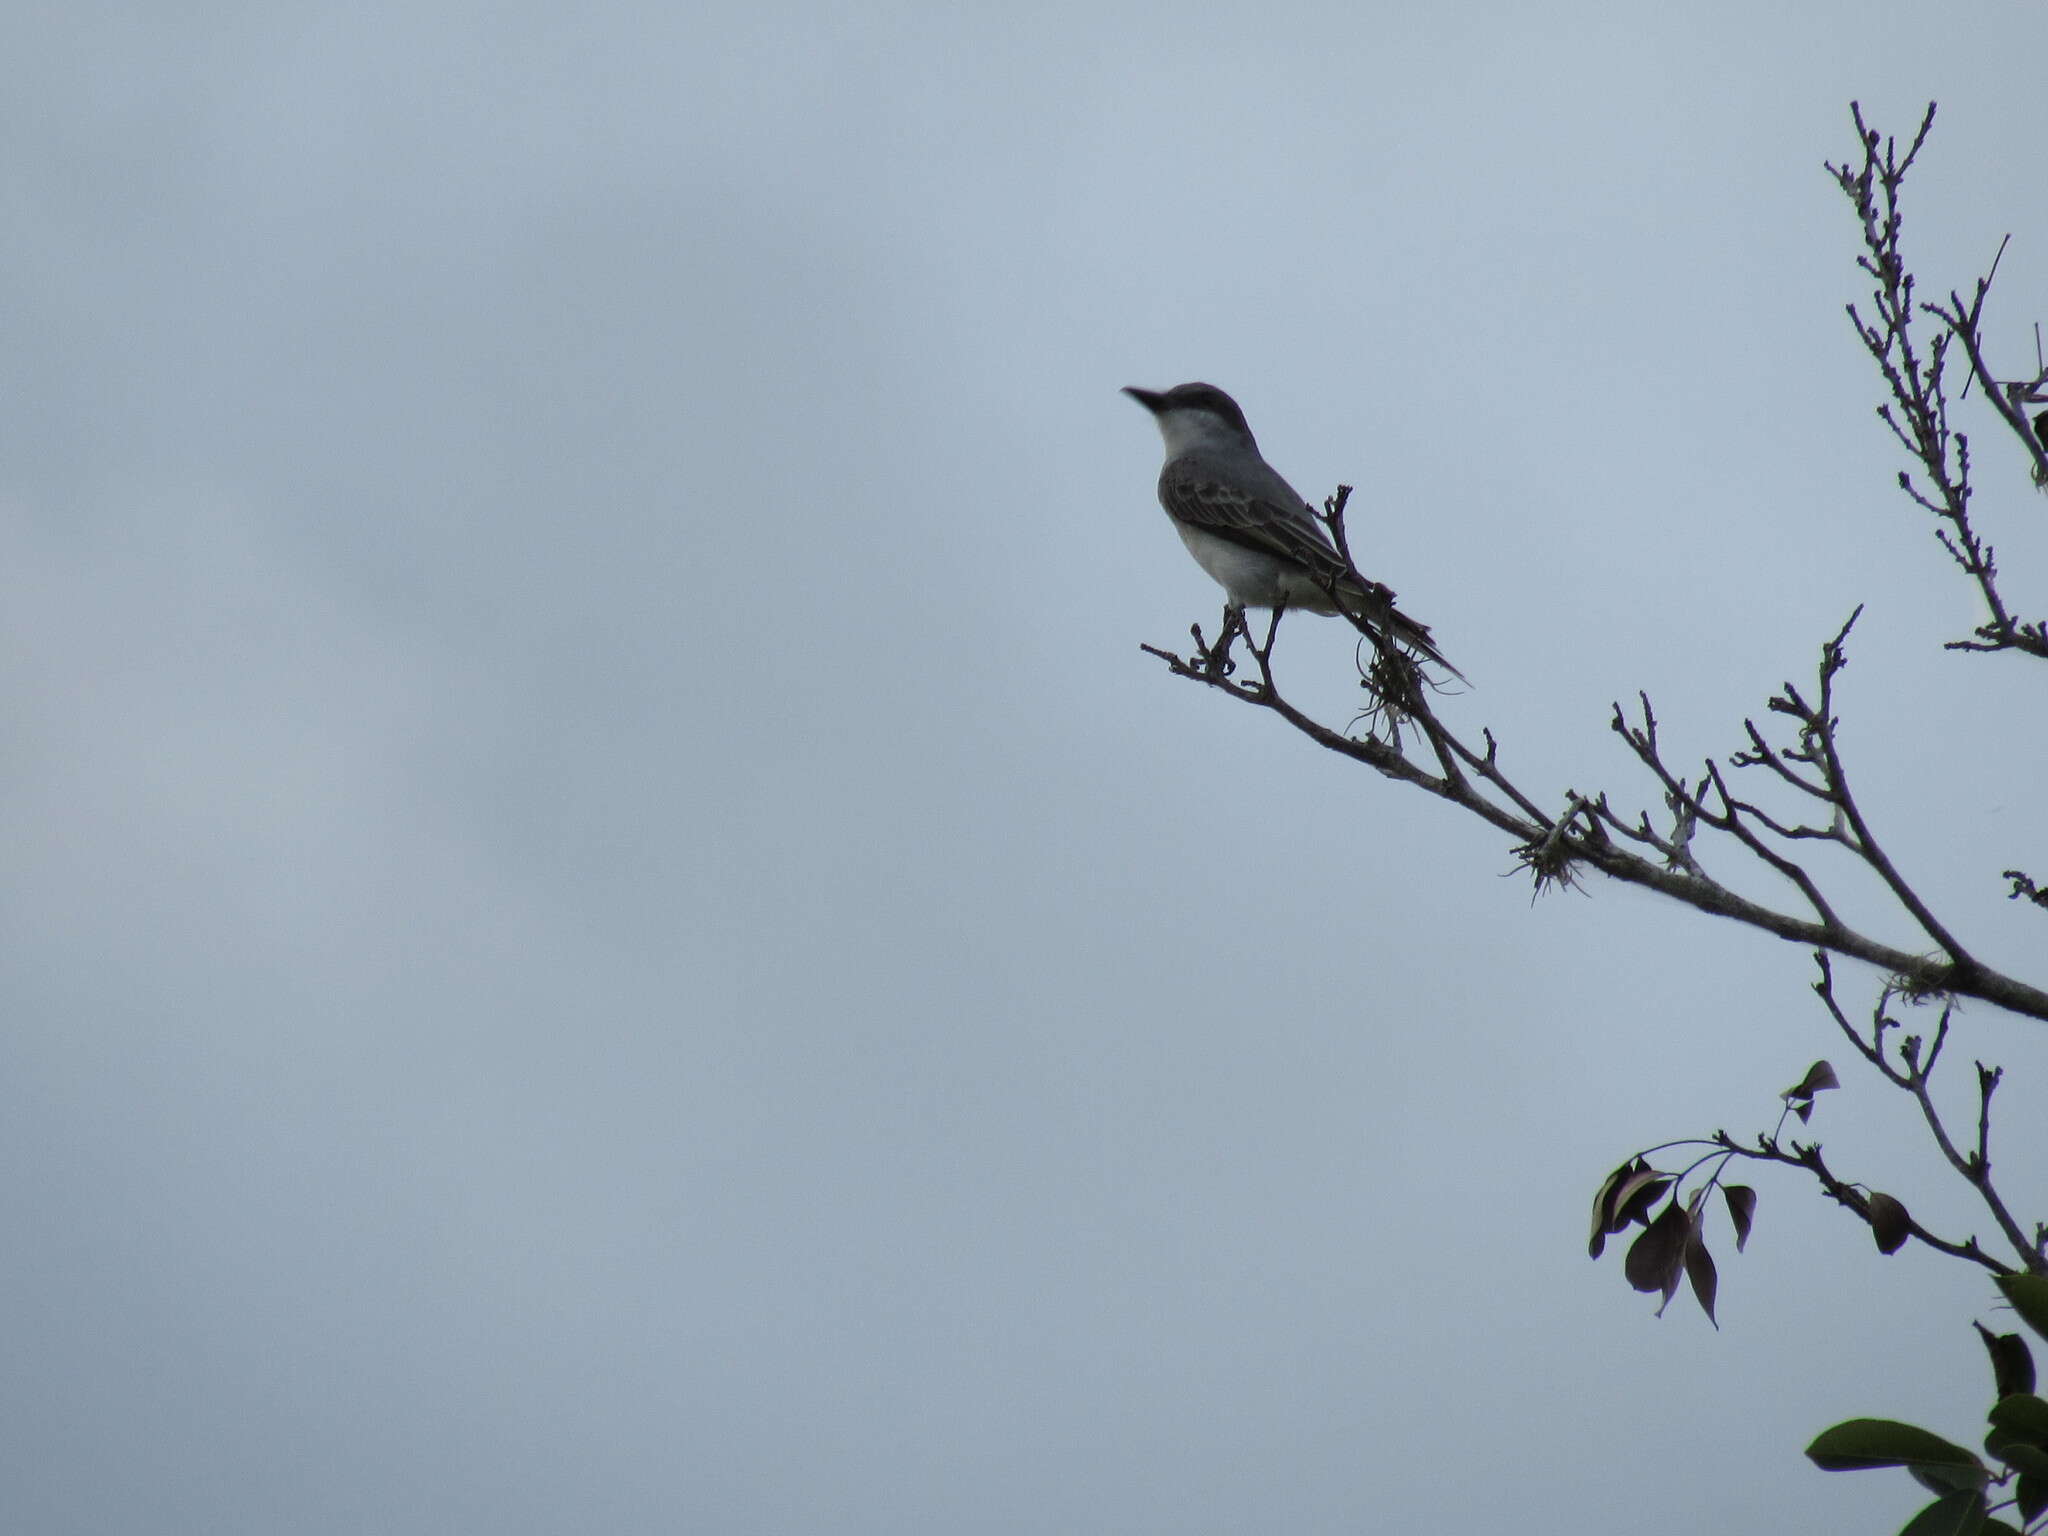 Image of Gray Kingbird